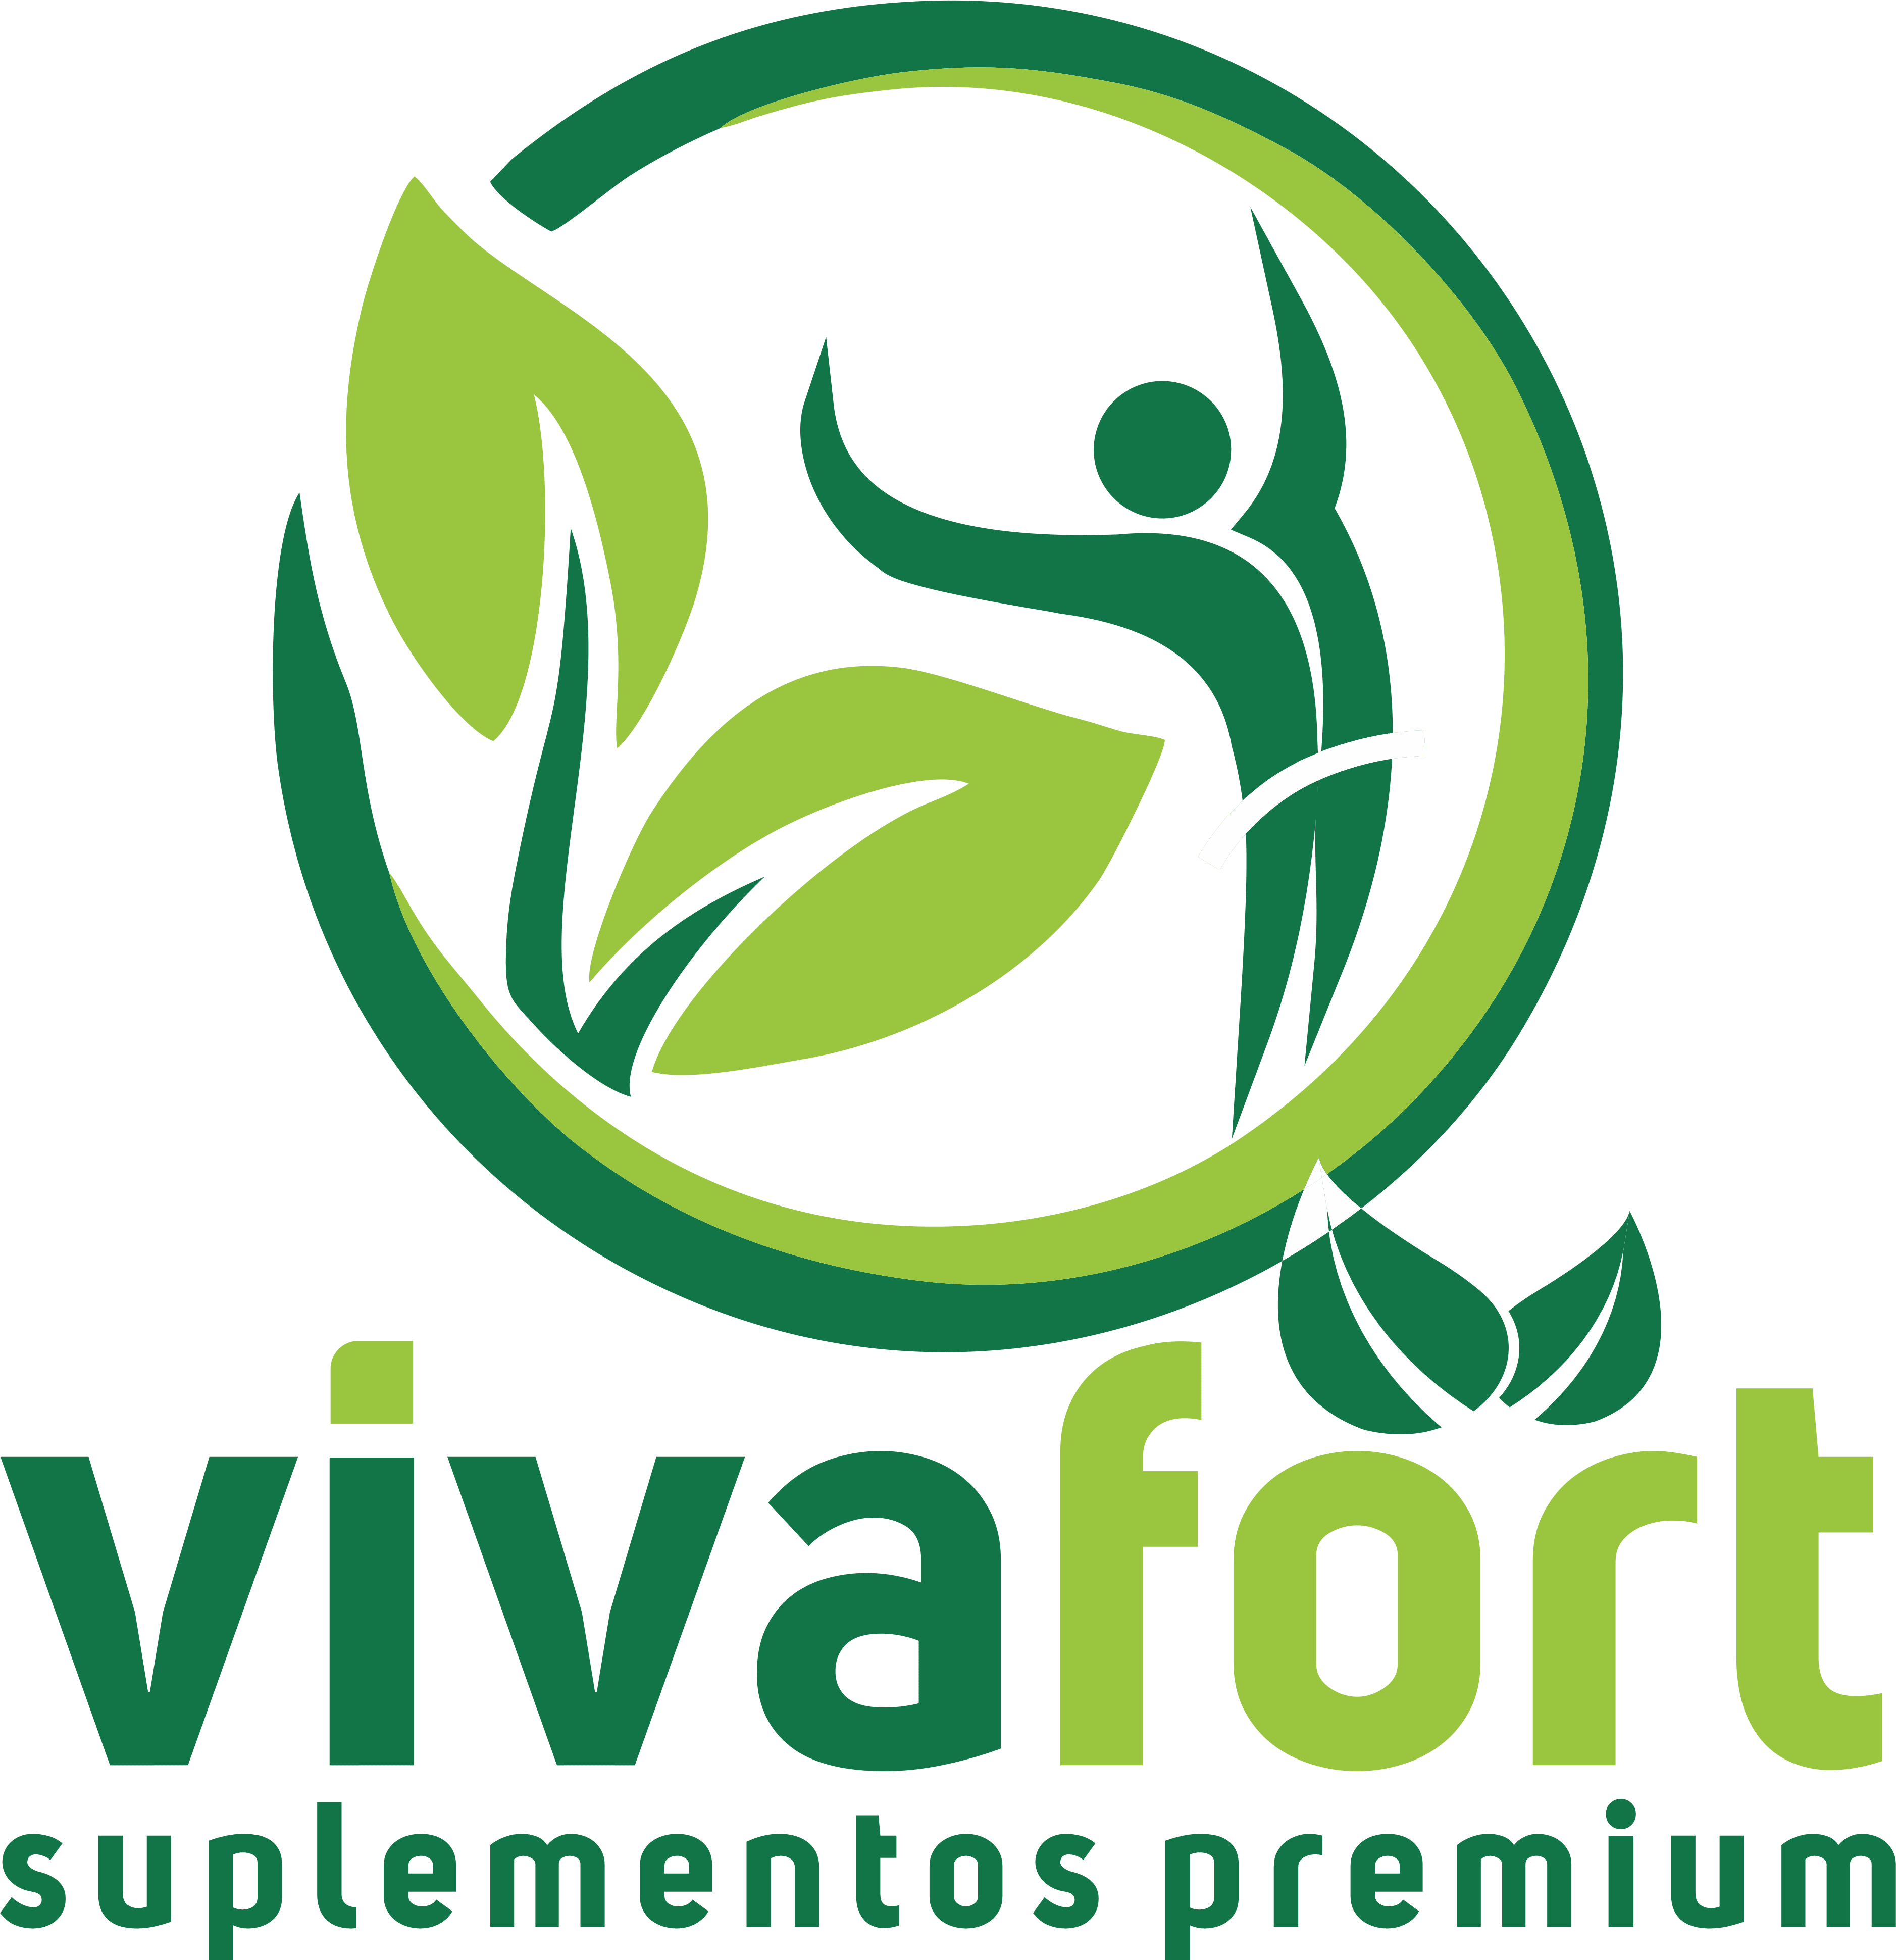 Vivafort Suplementos Premium